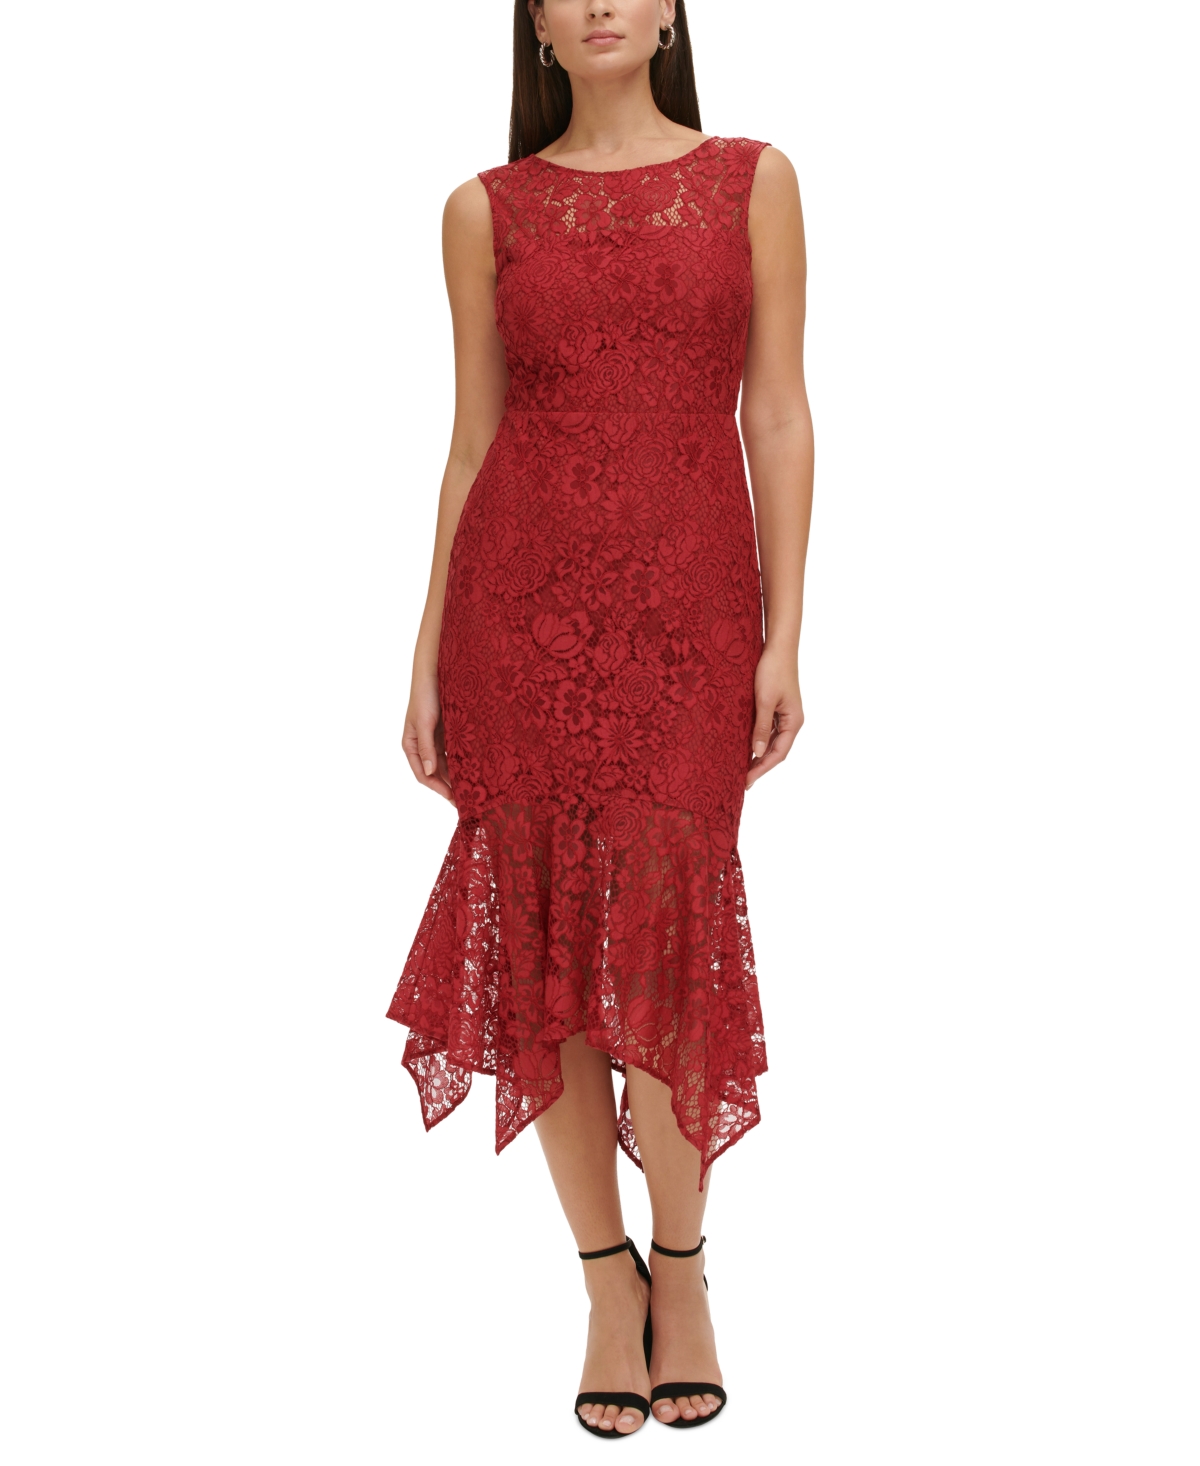 Buy Boardwalk Empire Inspired Dresses kensie Womens Floral Lace Handkerchief-Hem Midi Dress - Burgundy $63.99 AT vintagedancer.com